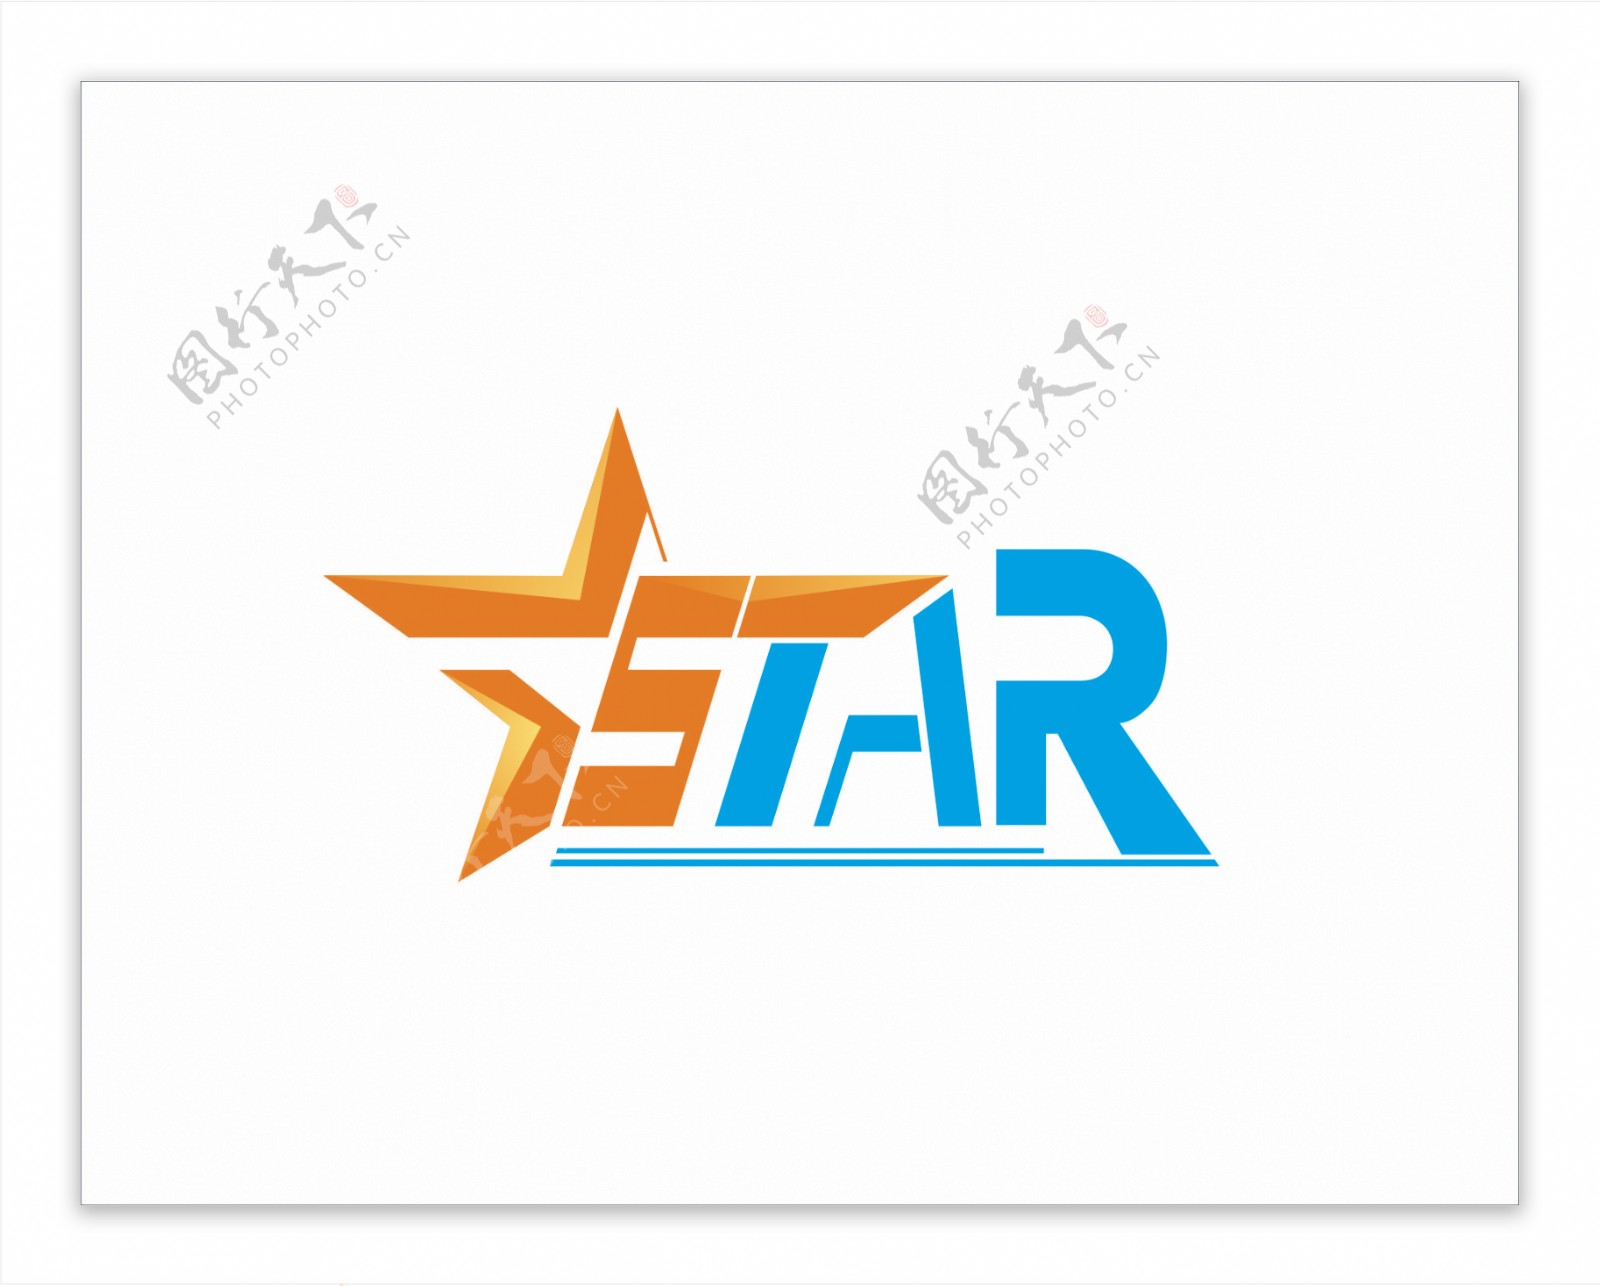 star标志设计